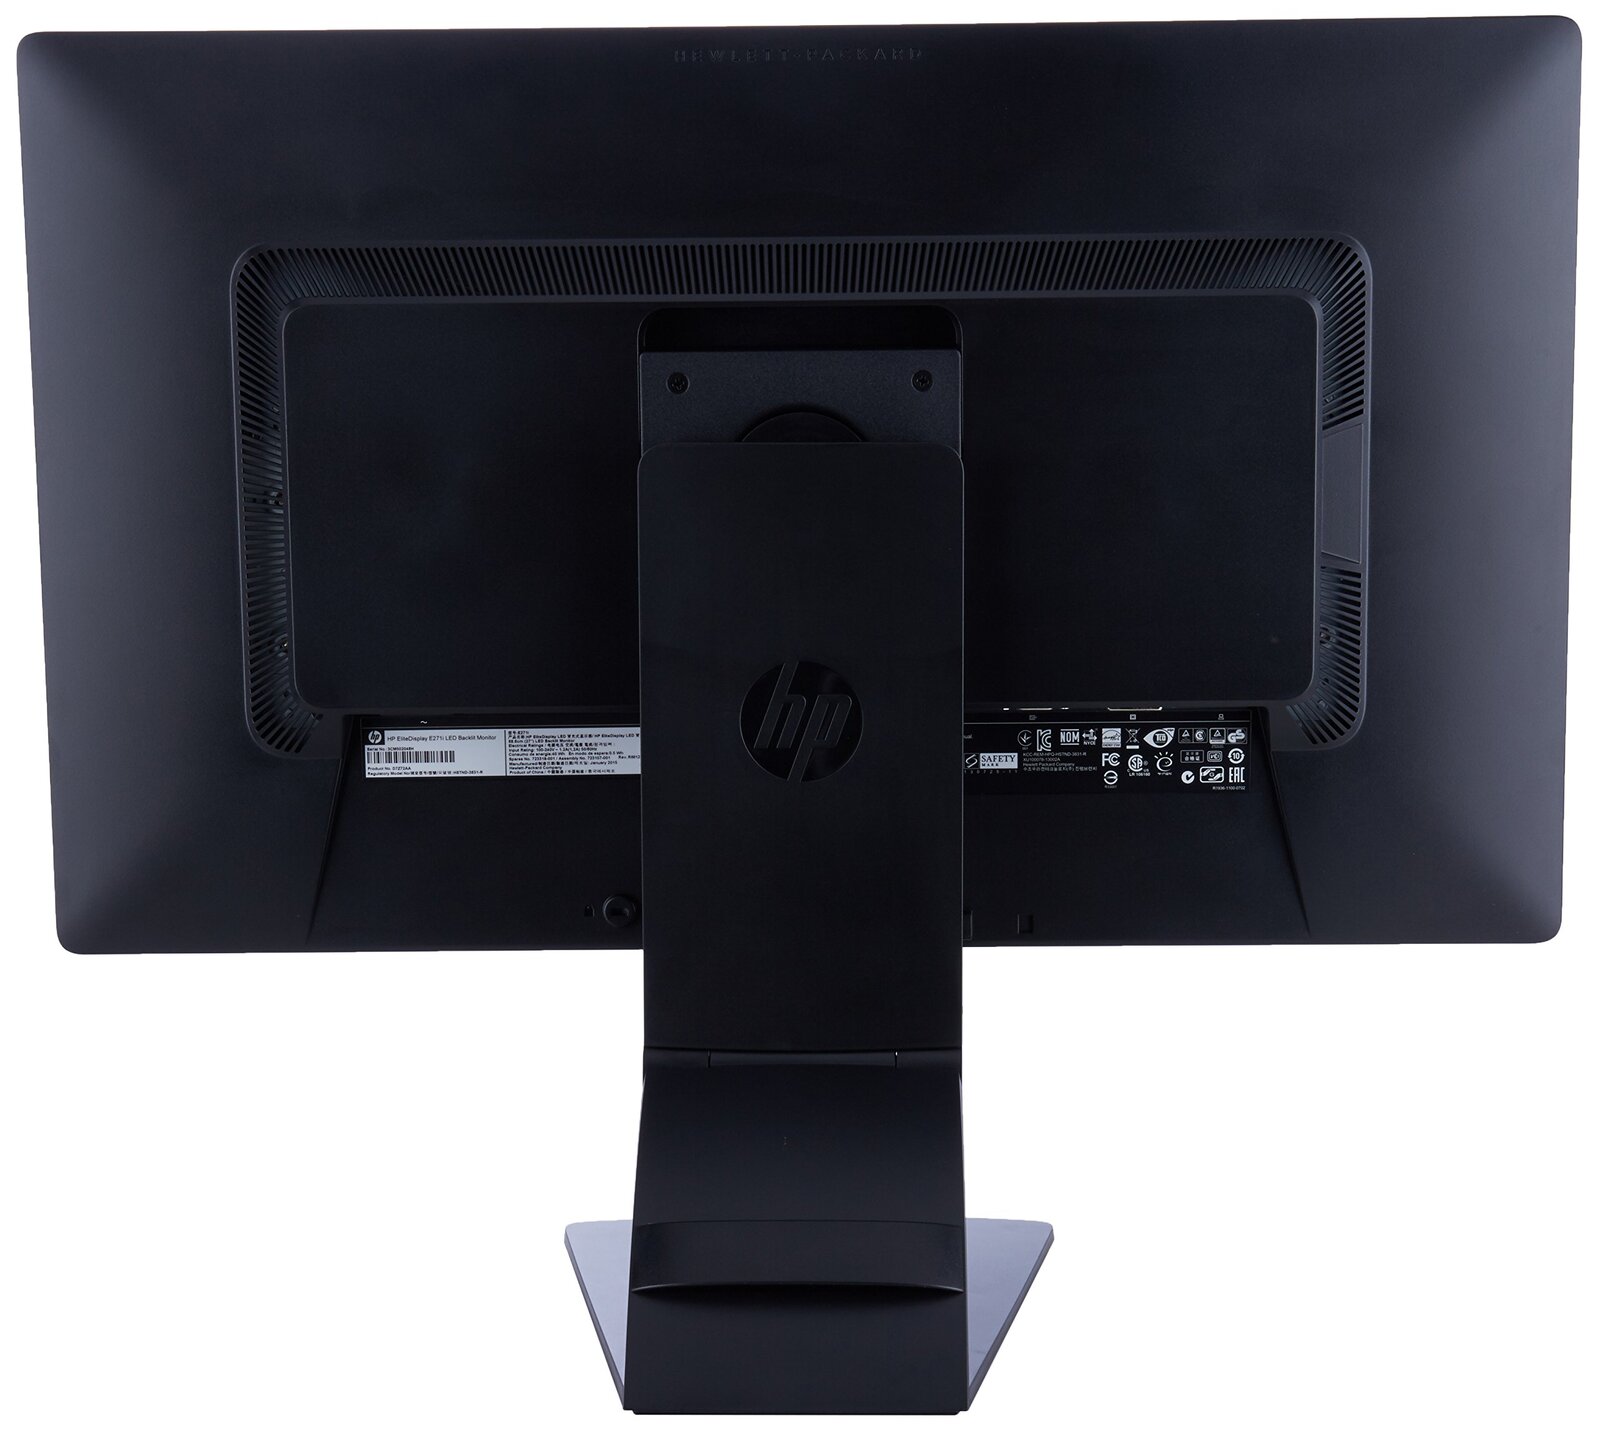 HP EliteDisplay E271i 27" IPS LED LCD Monitor 1920 x 1080 DVI DP VGA USB Hub Image 2